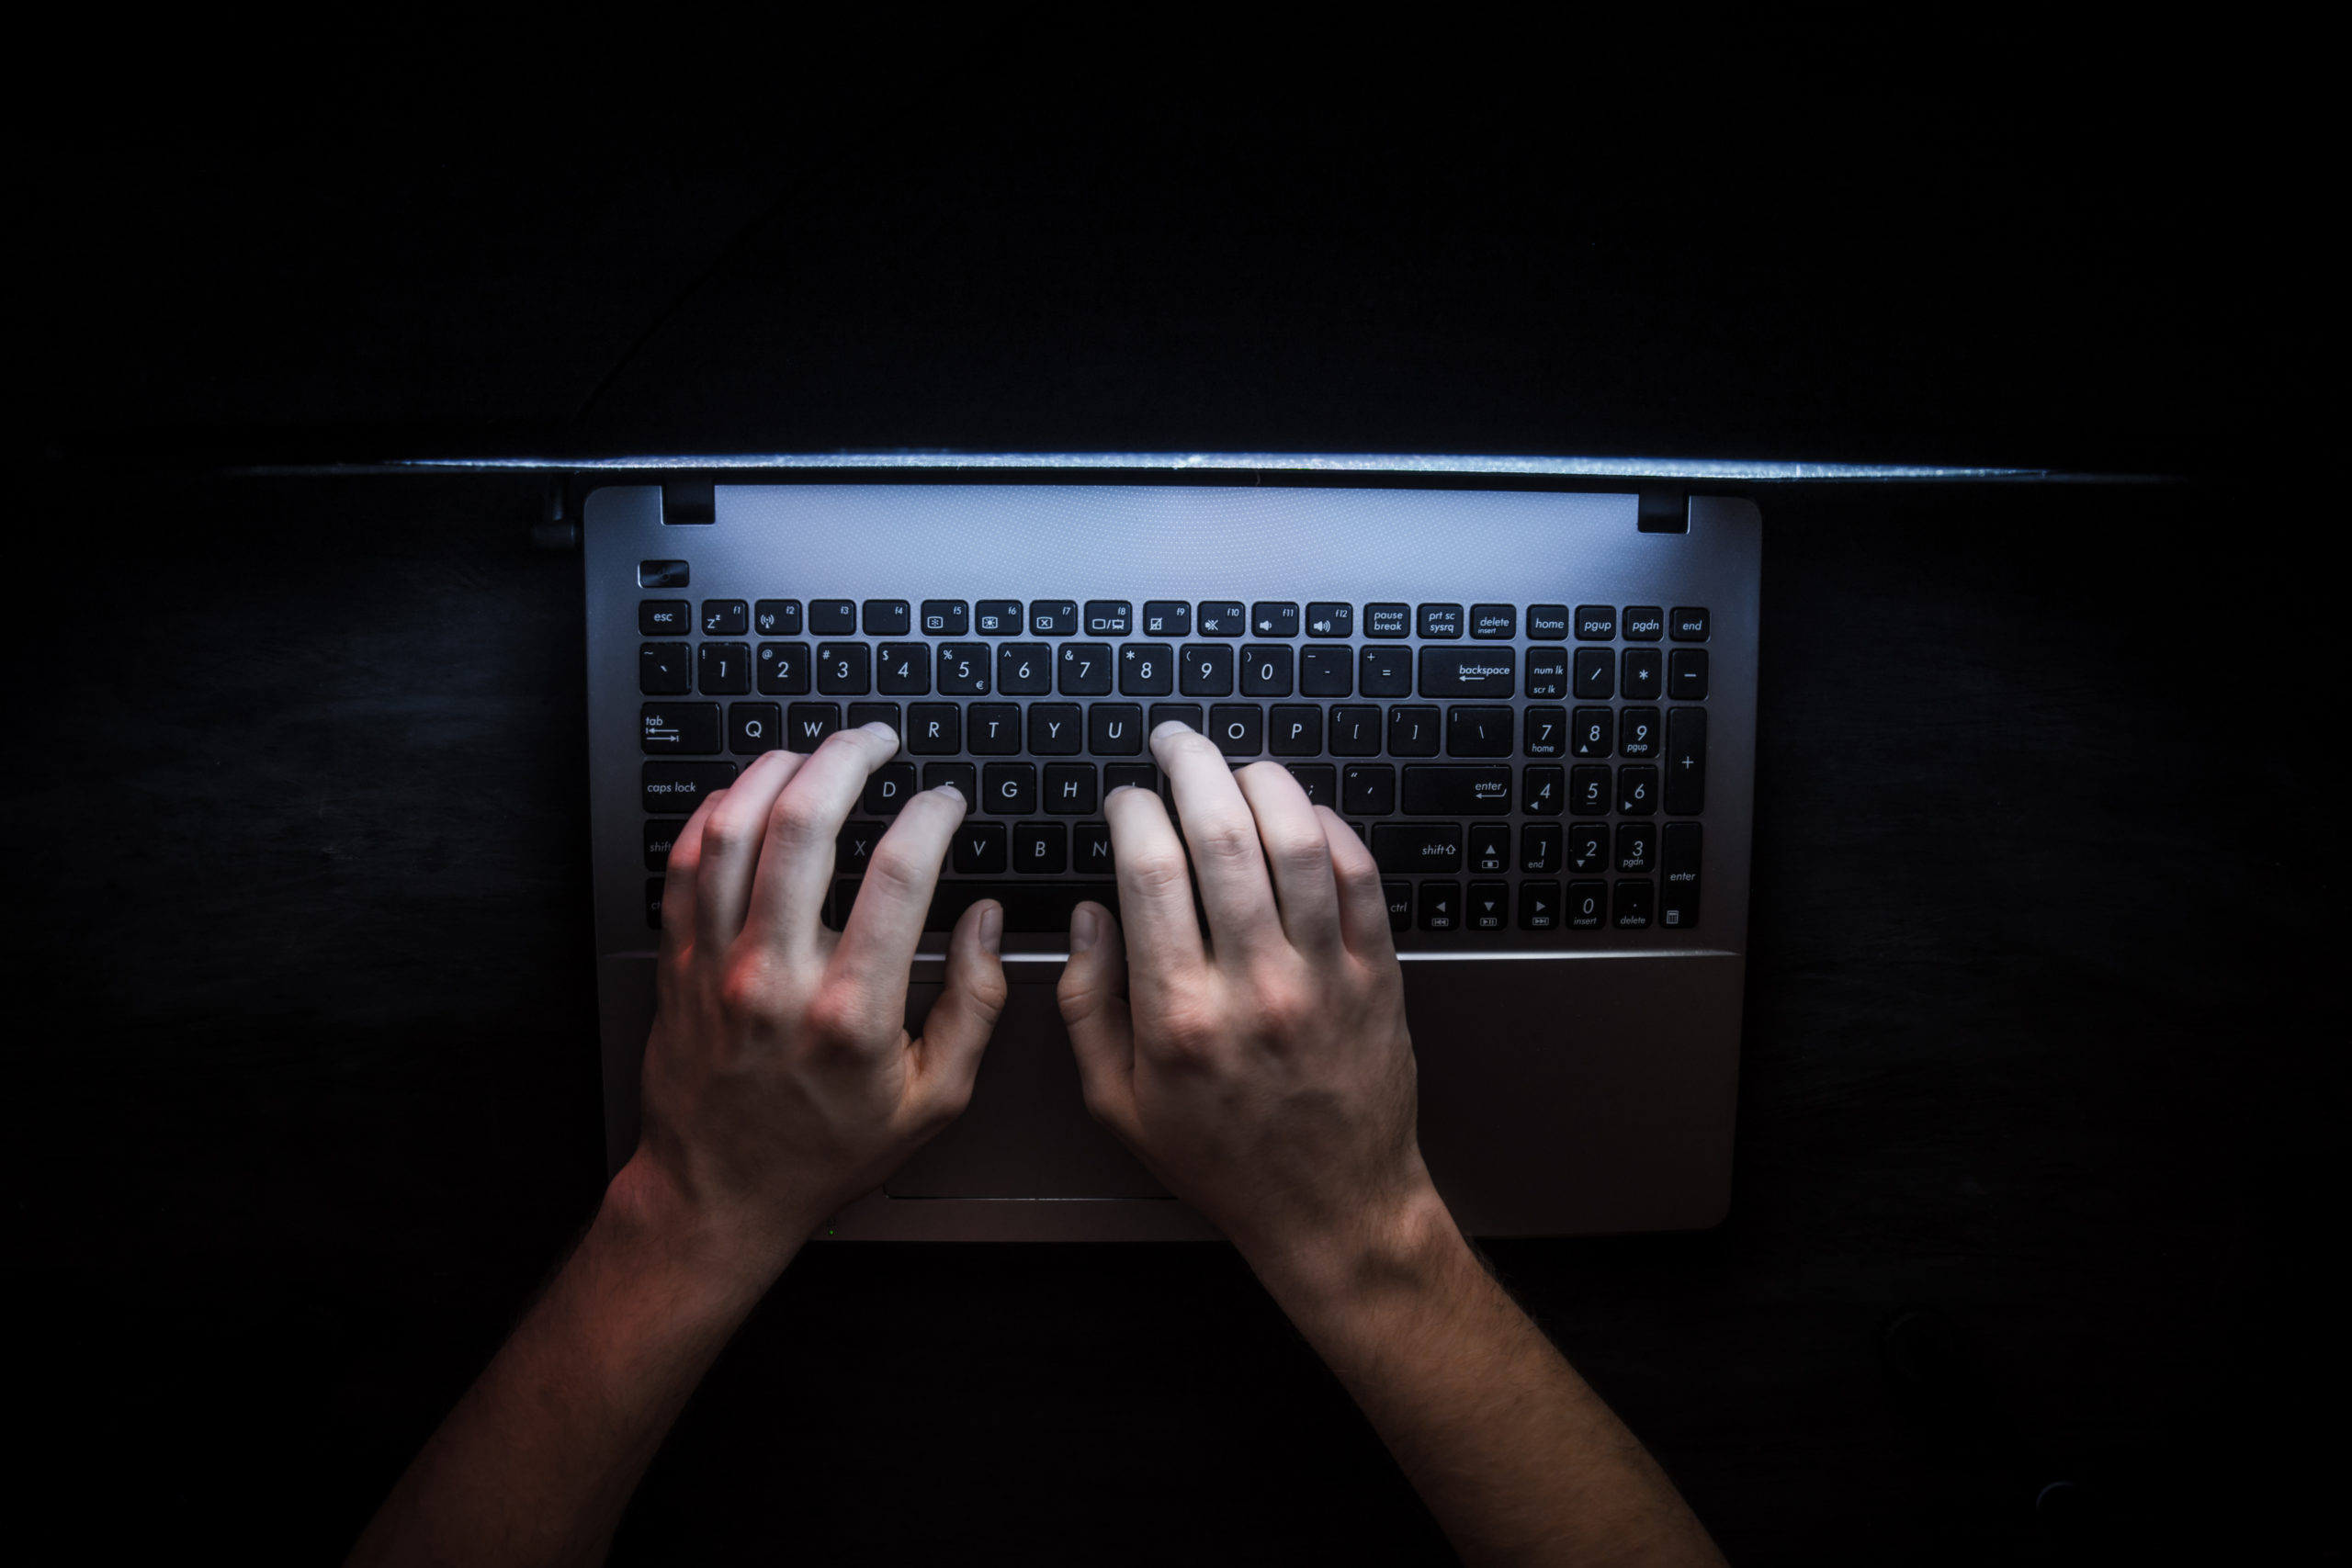  Hacker in dark room on laptop attempting a data breach.